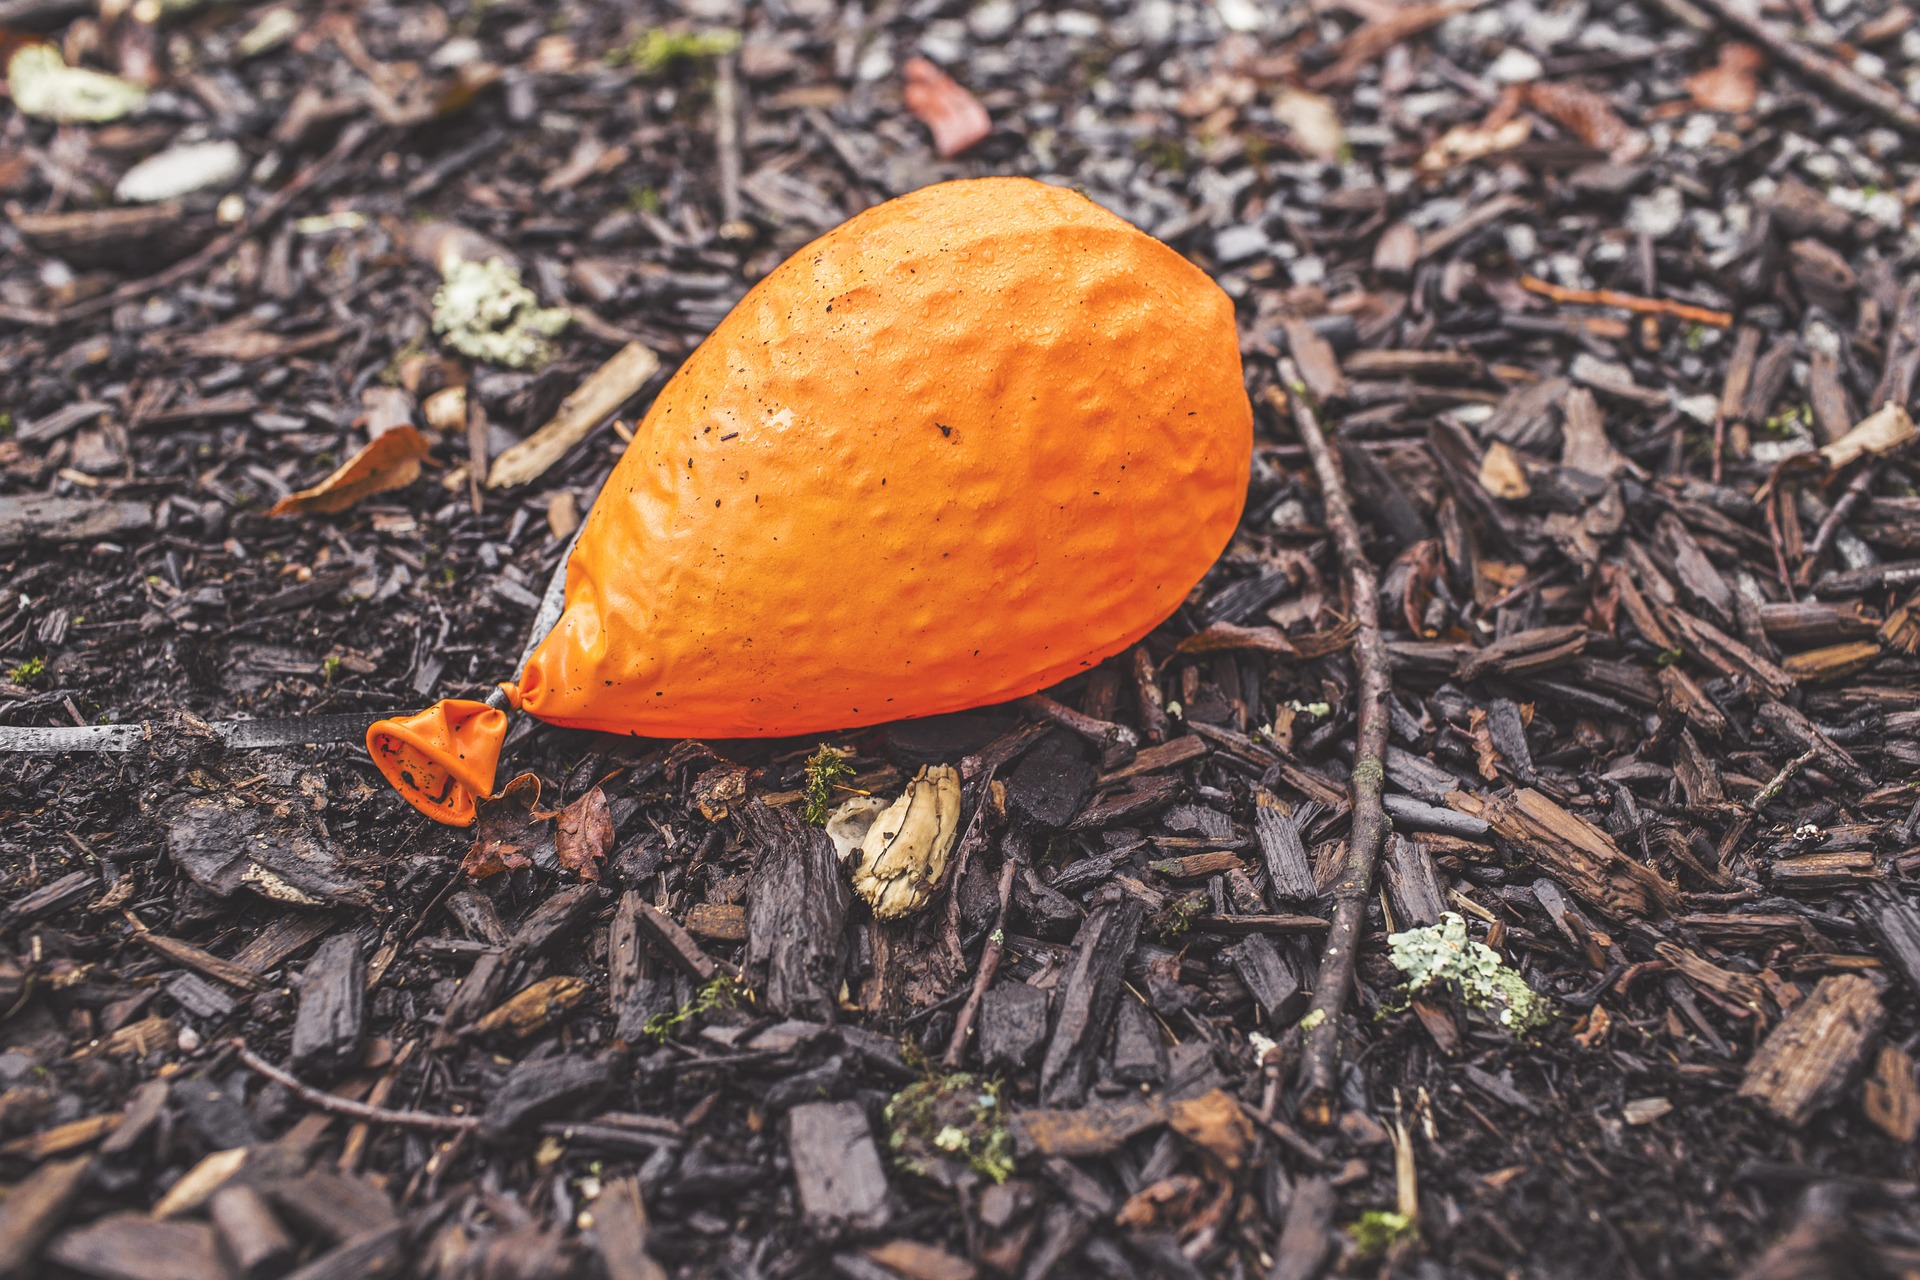 Deflated orange balloon on the ground.